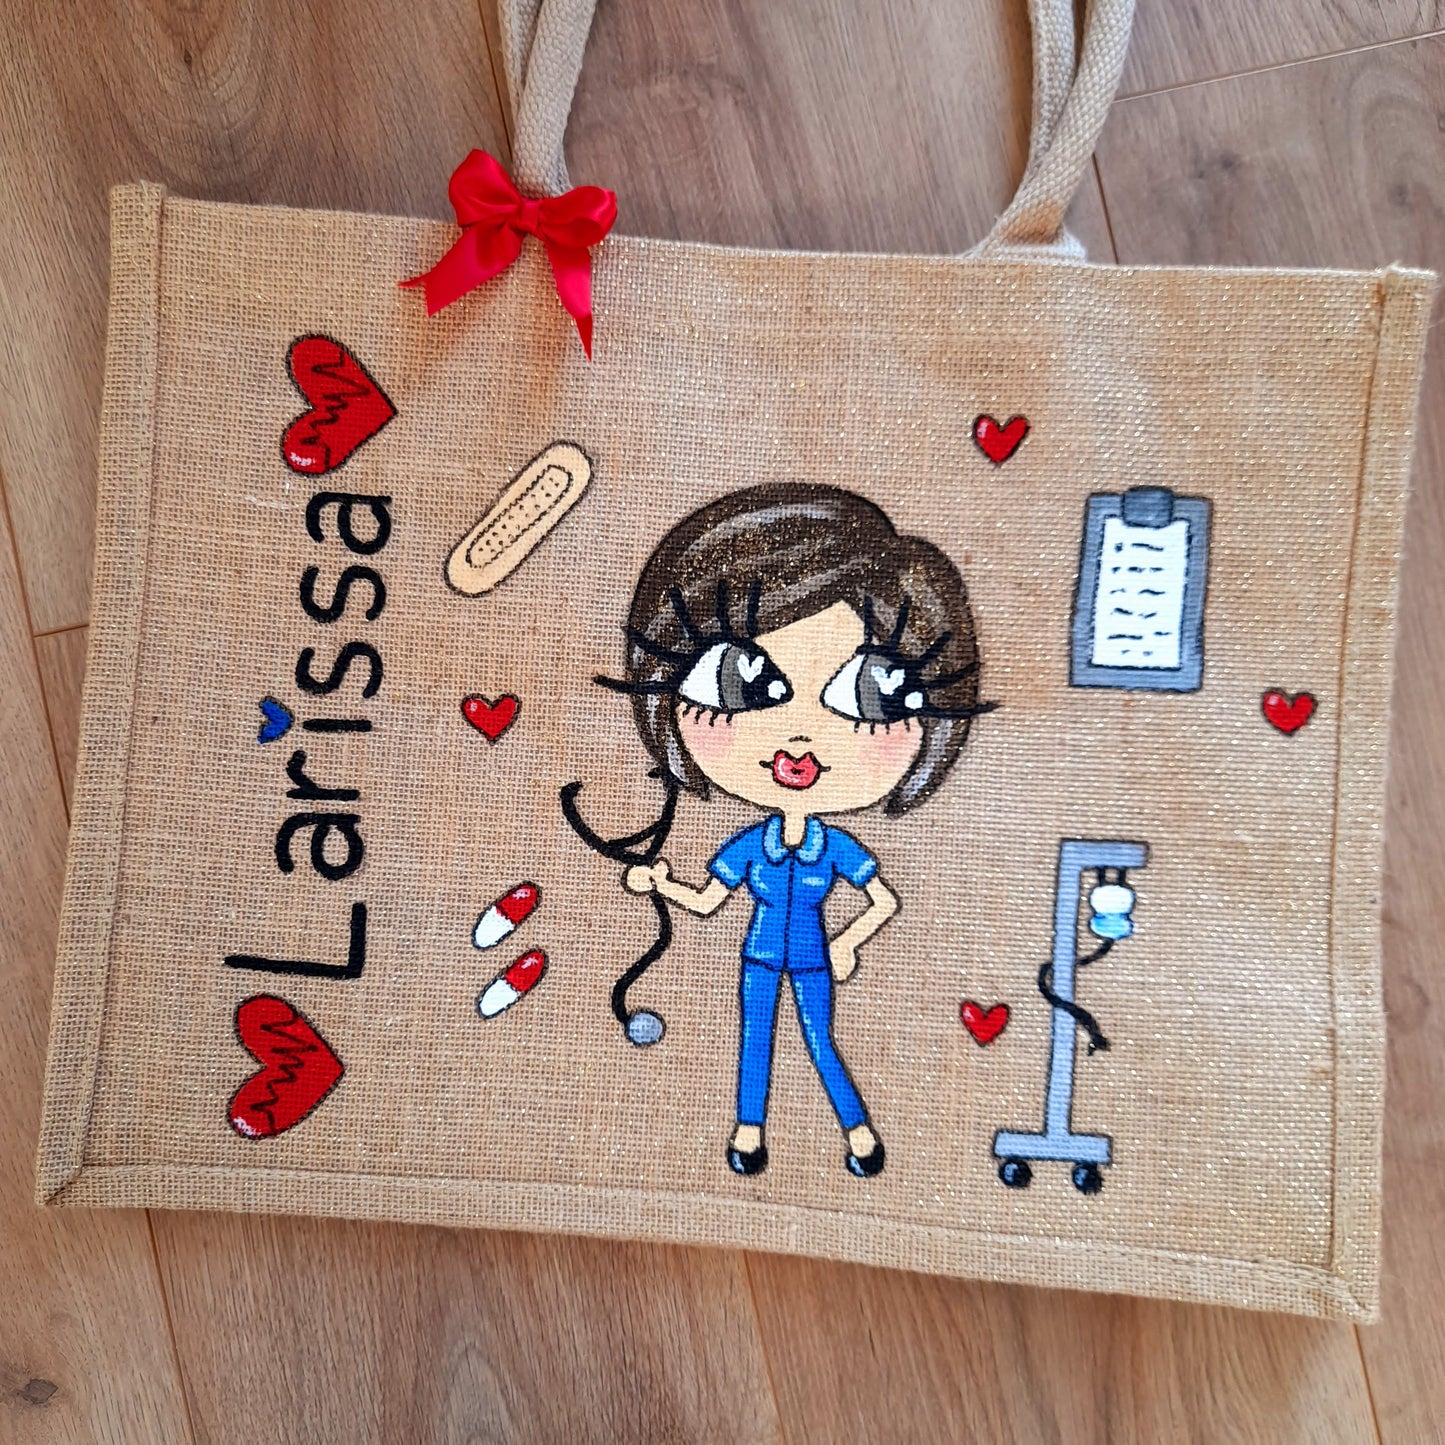 Personalised Nurse Jute Bag